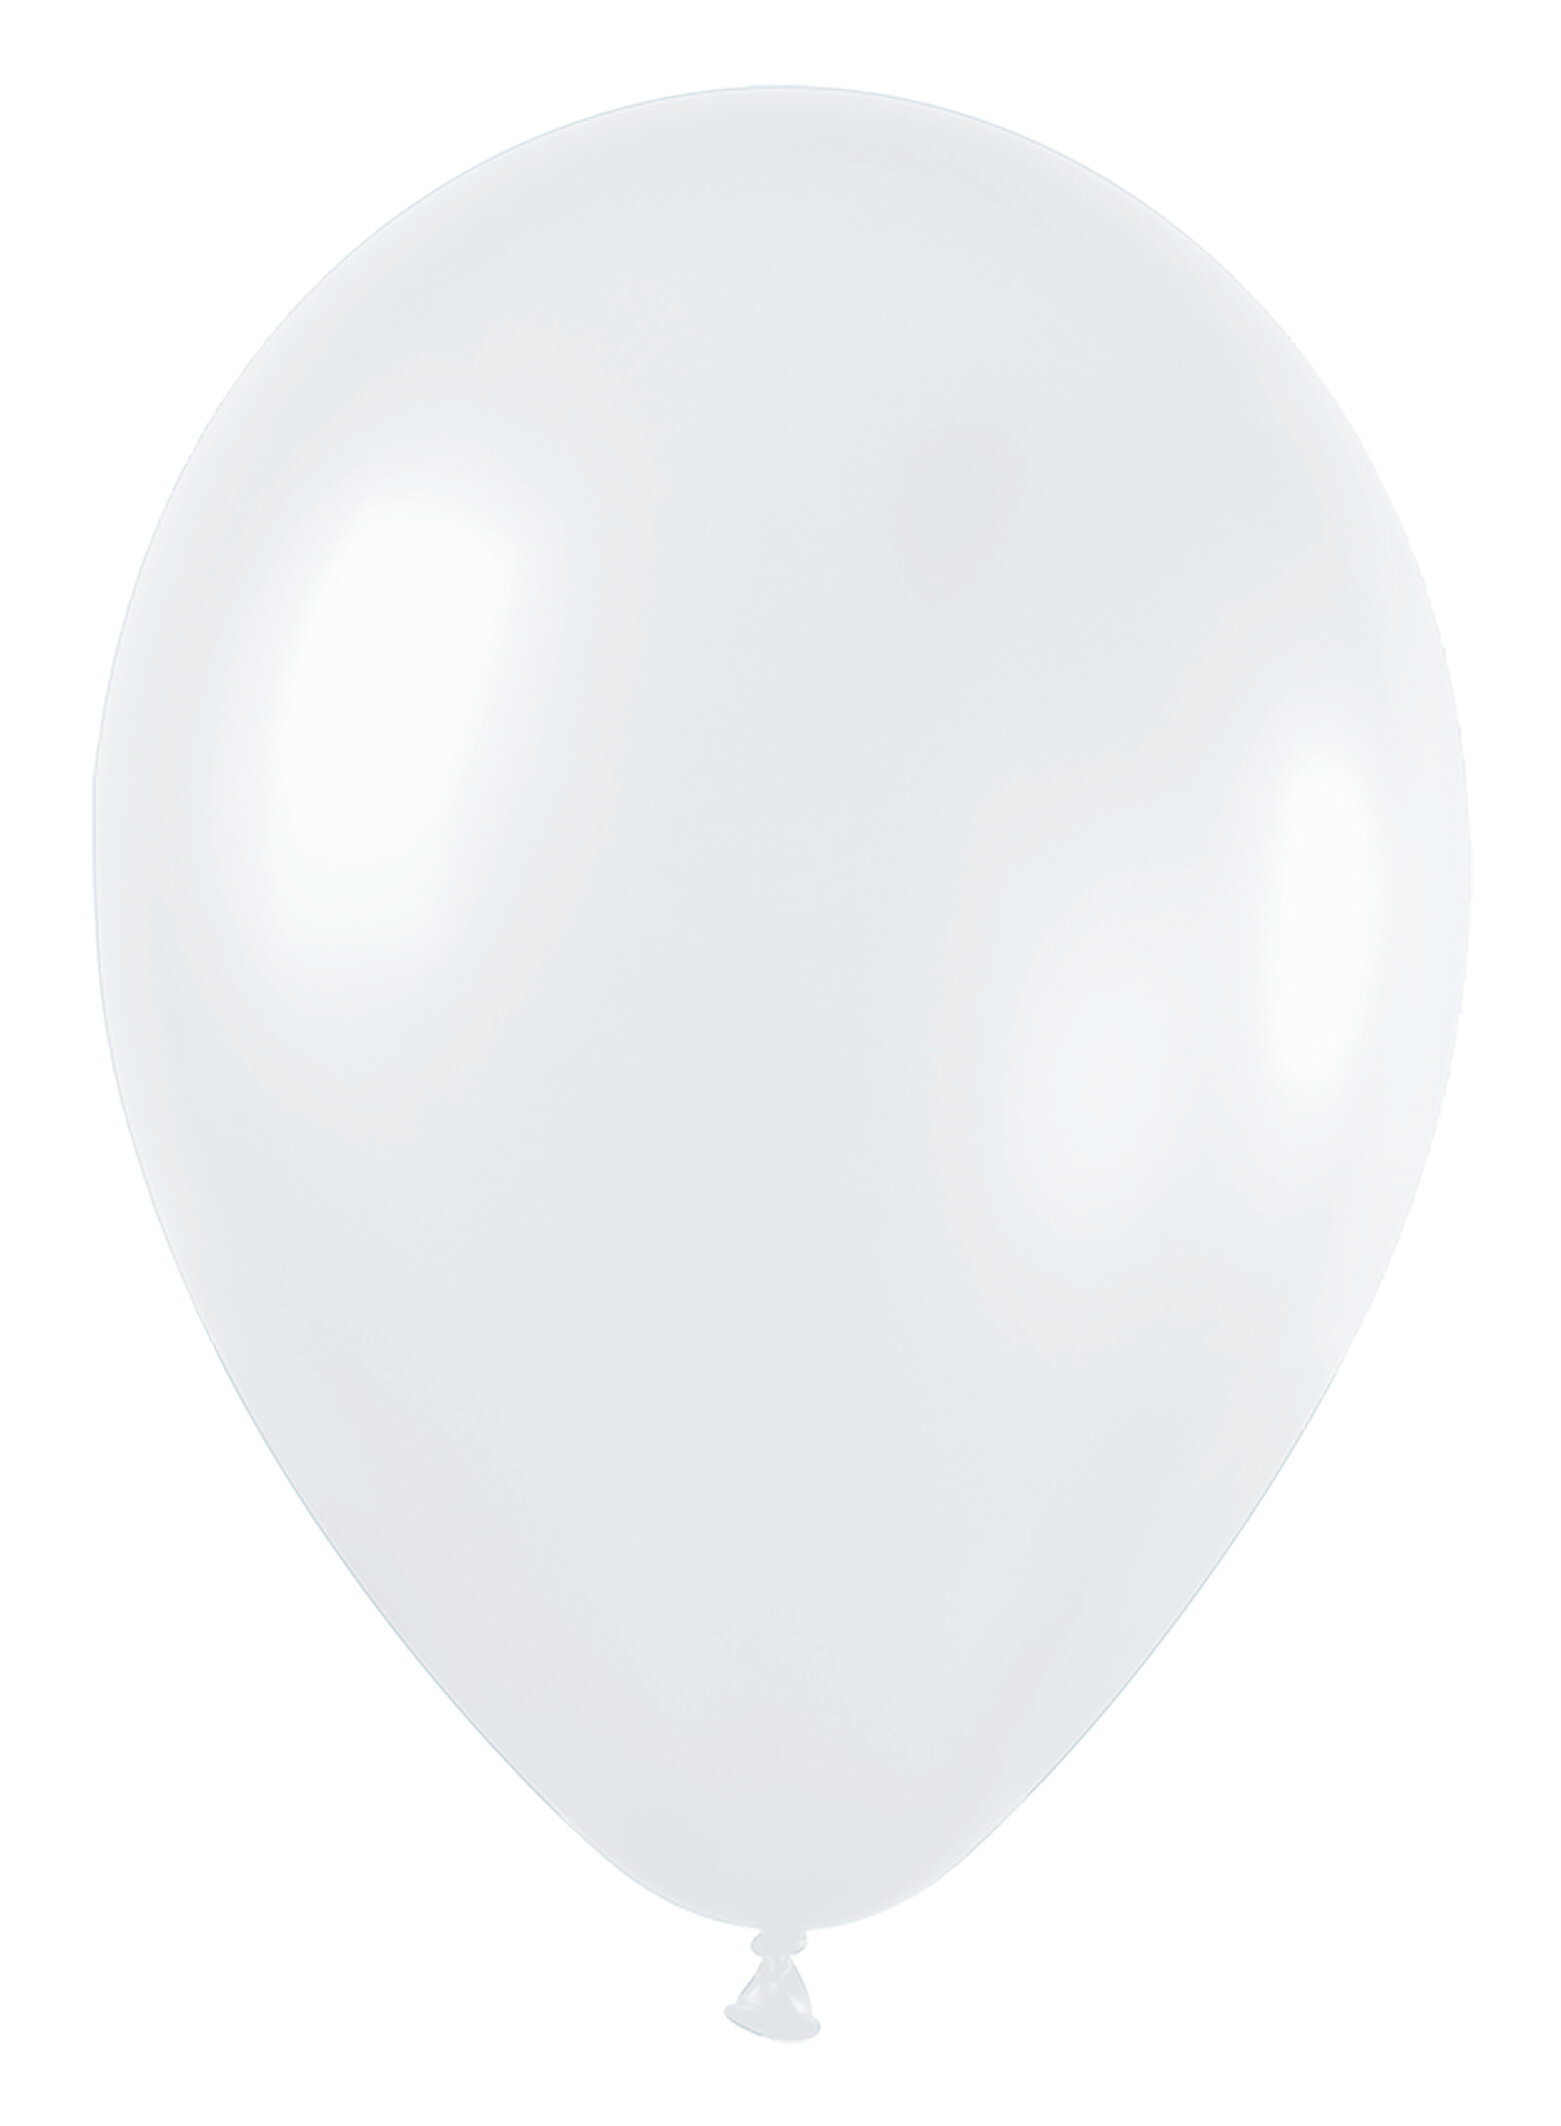 Шар белый свет. Шар белый перламутр. Большой шар перламутр белый. Маленькие белые шарики. Шар белый 18.